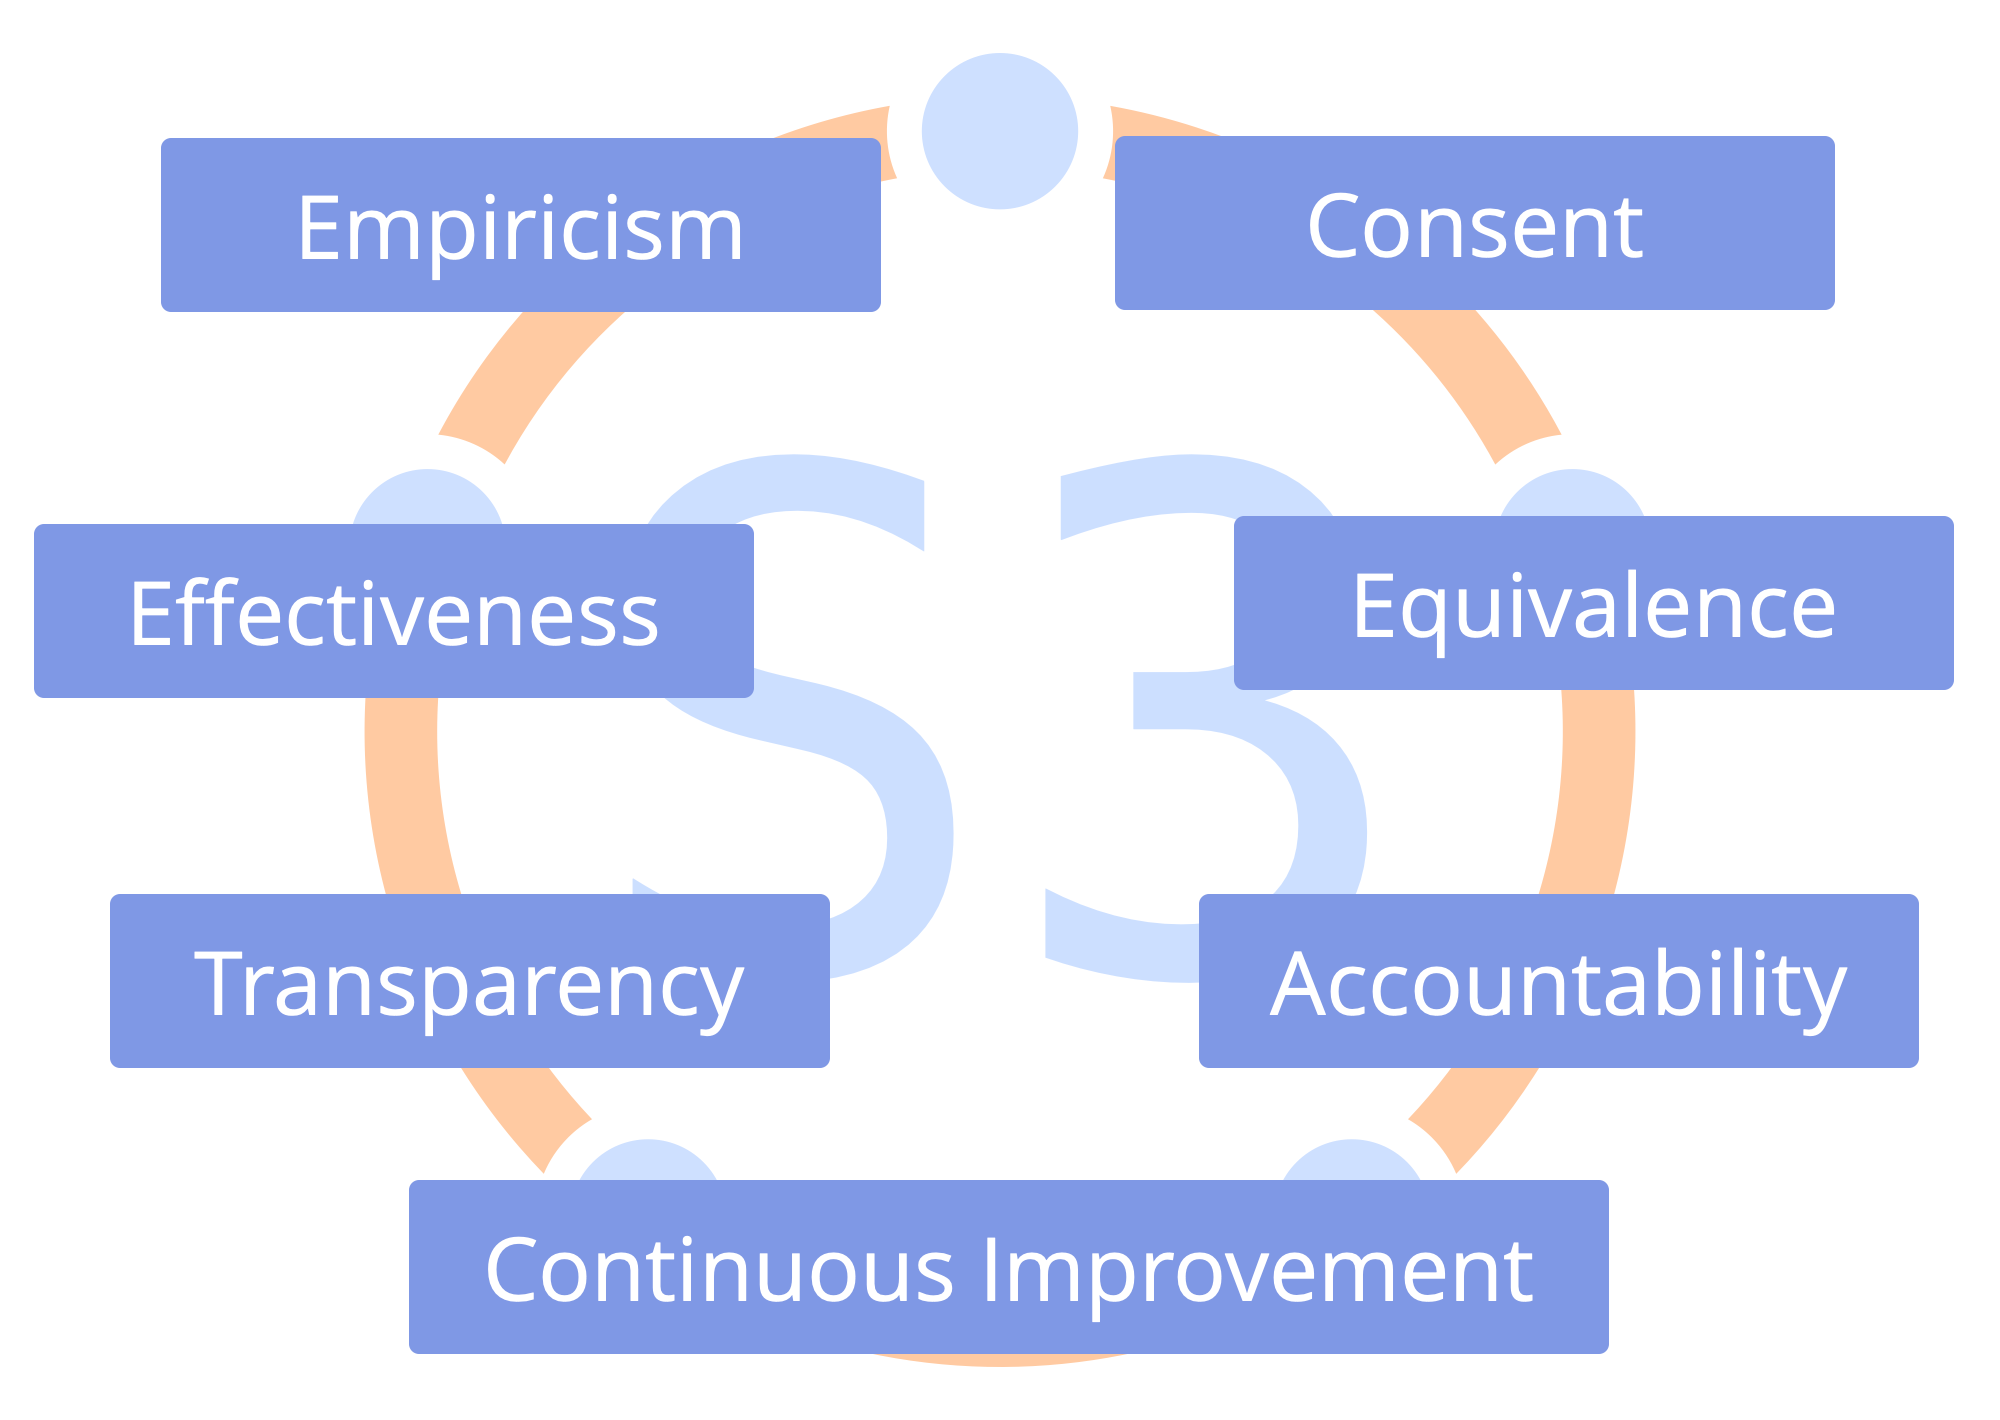 The Seven Principles